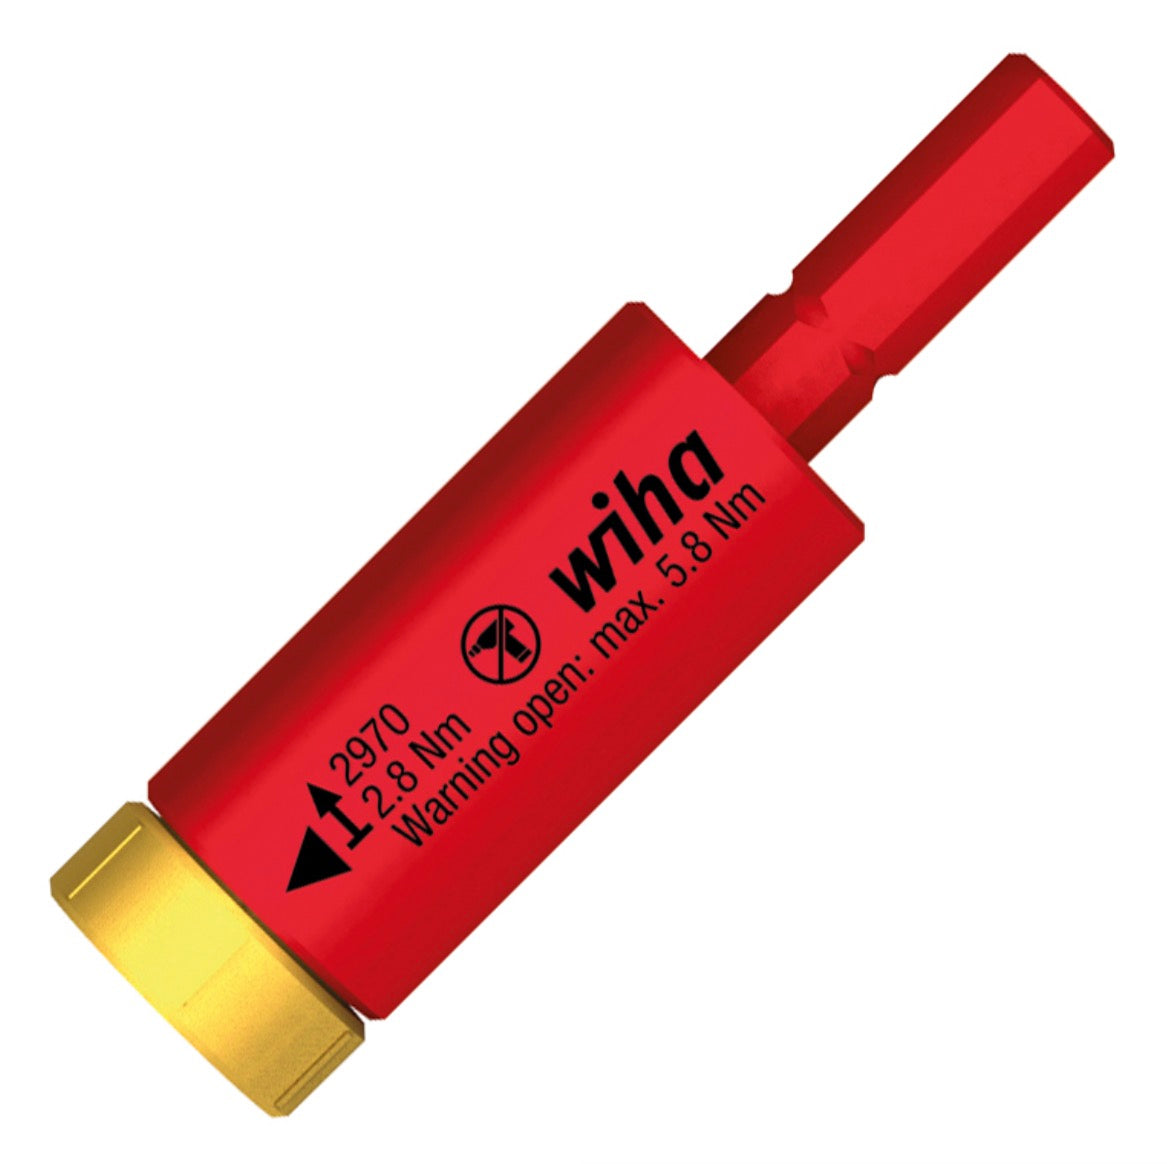 Wiha Drehmoment Easy Torque Adapter 2,8 Nm für slimBits ( 41344 ) - Toolbrothers